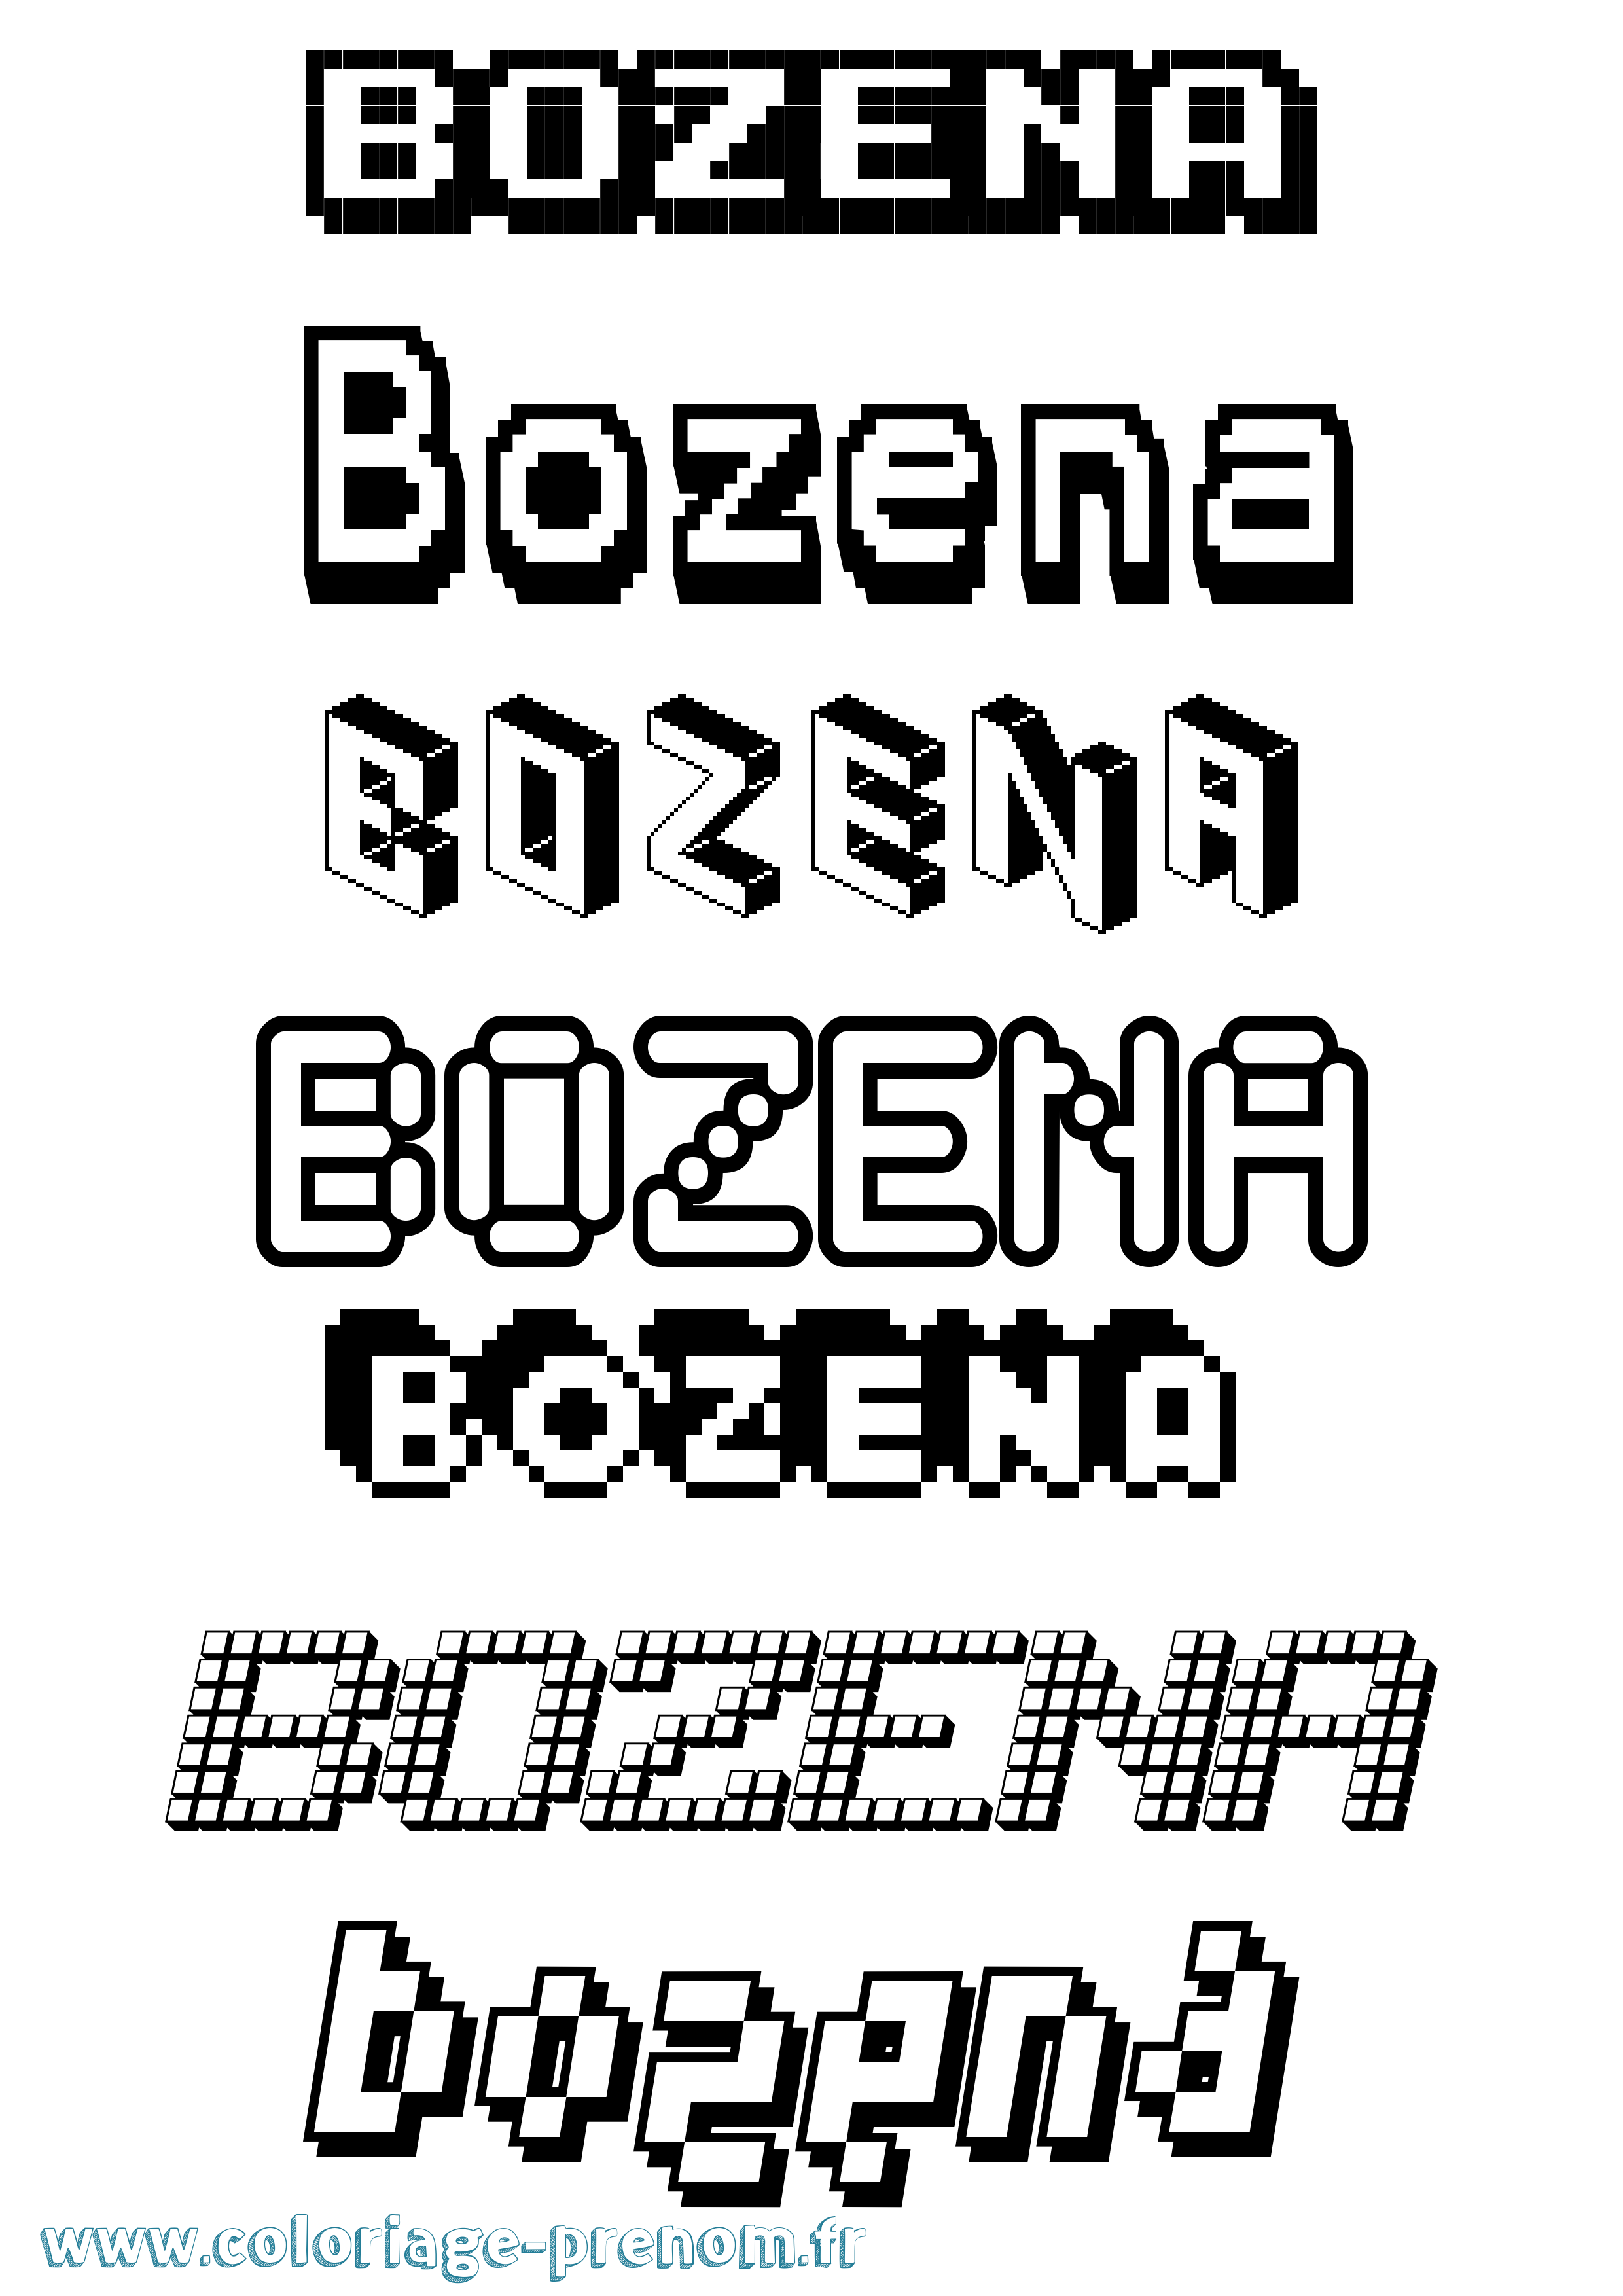 Coloriage prénom Bozena Pixel